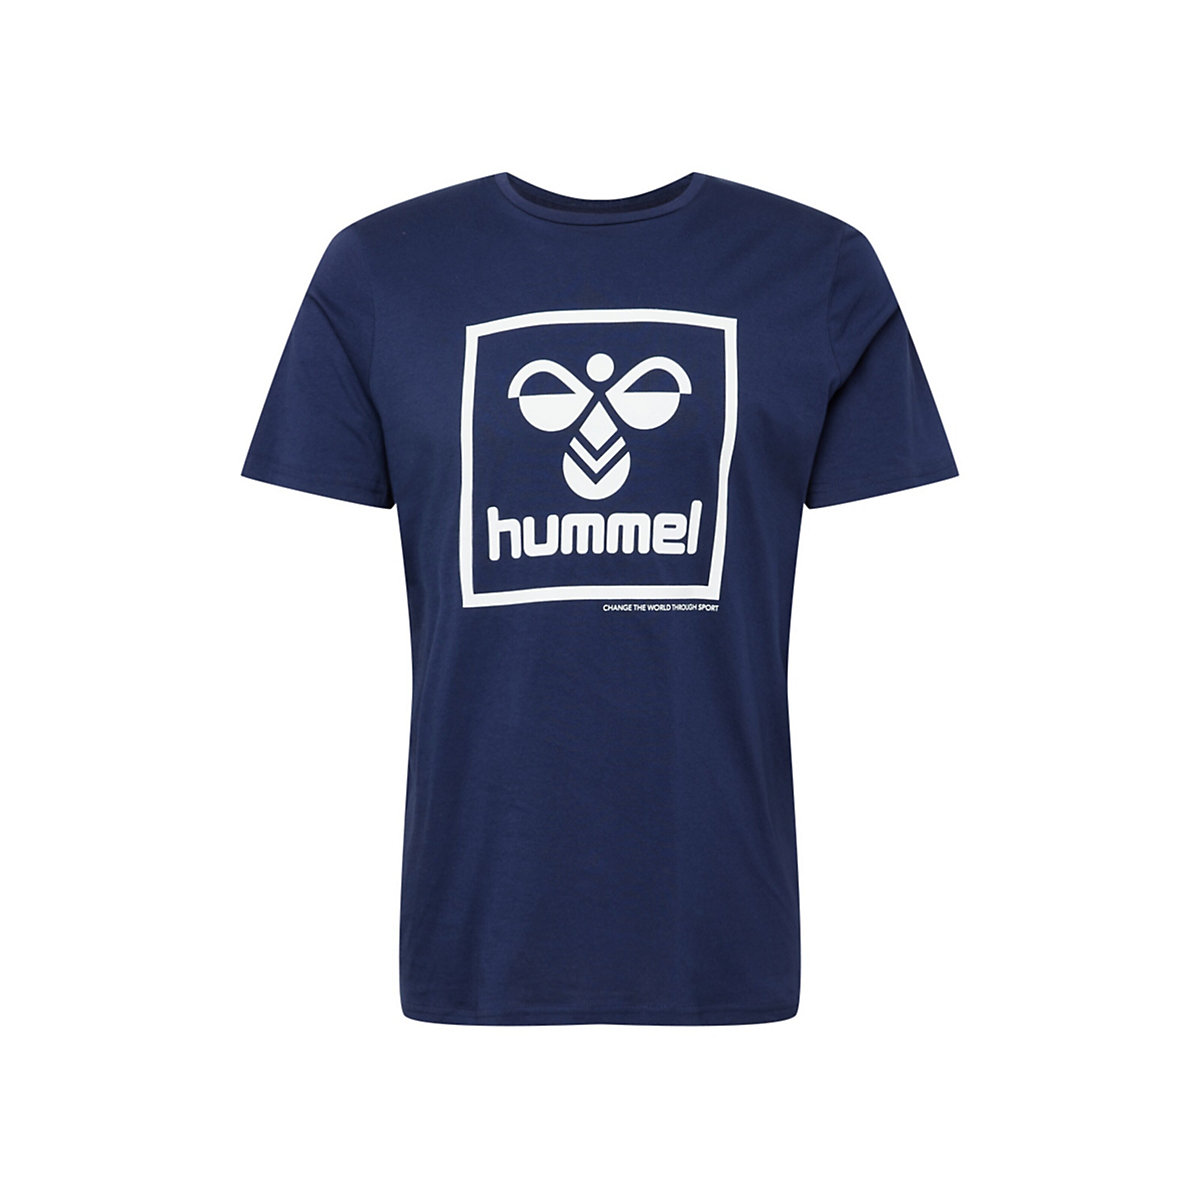 hummel Shirt blau/weiß